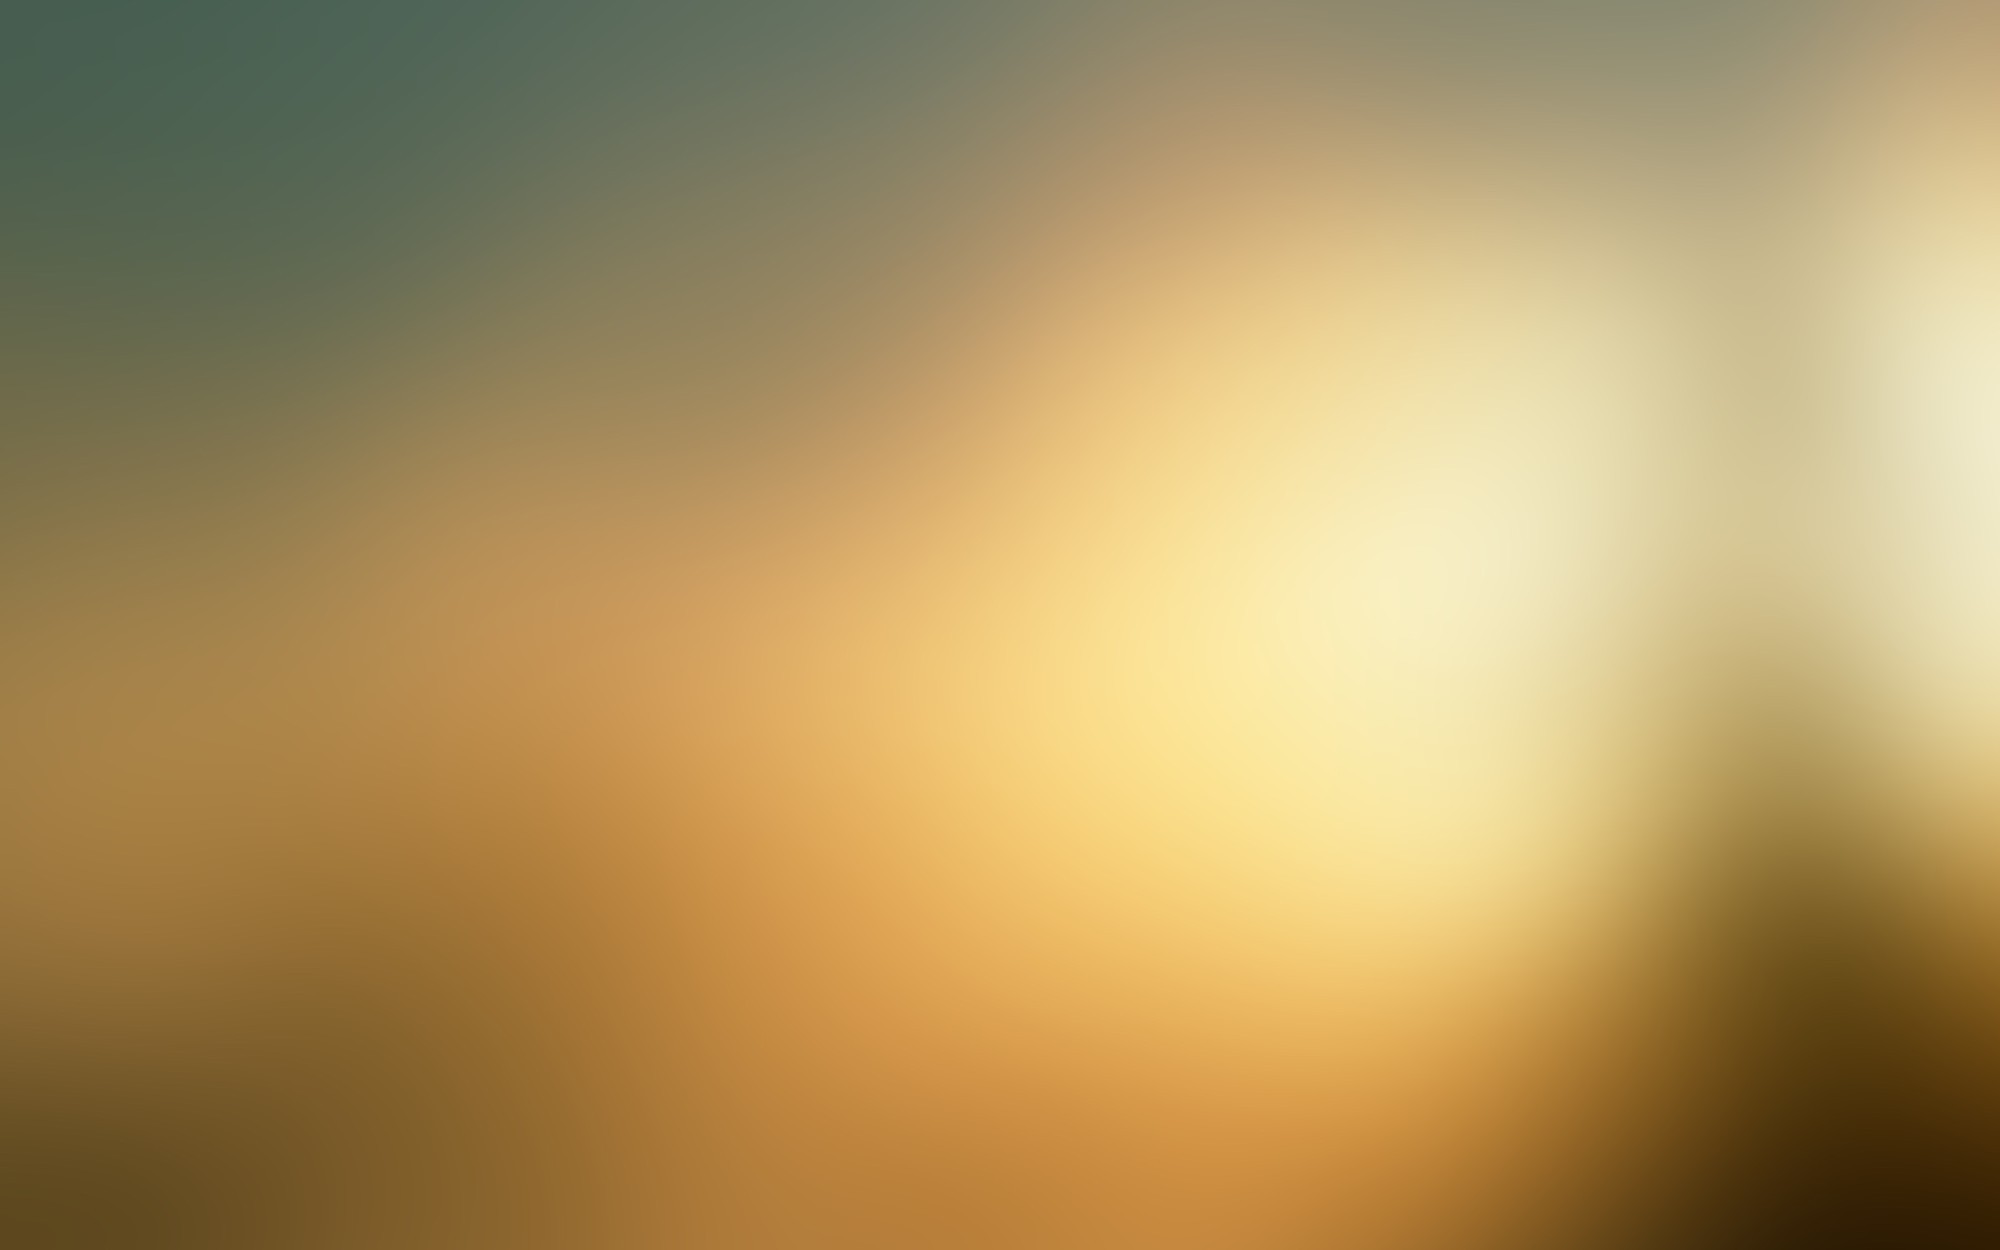 blur background wallpaper,sky,yellow,daytime,brown,orange